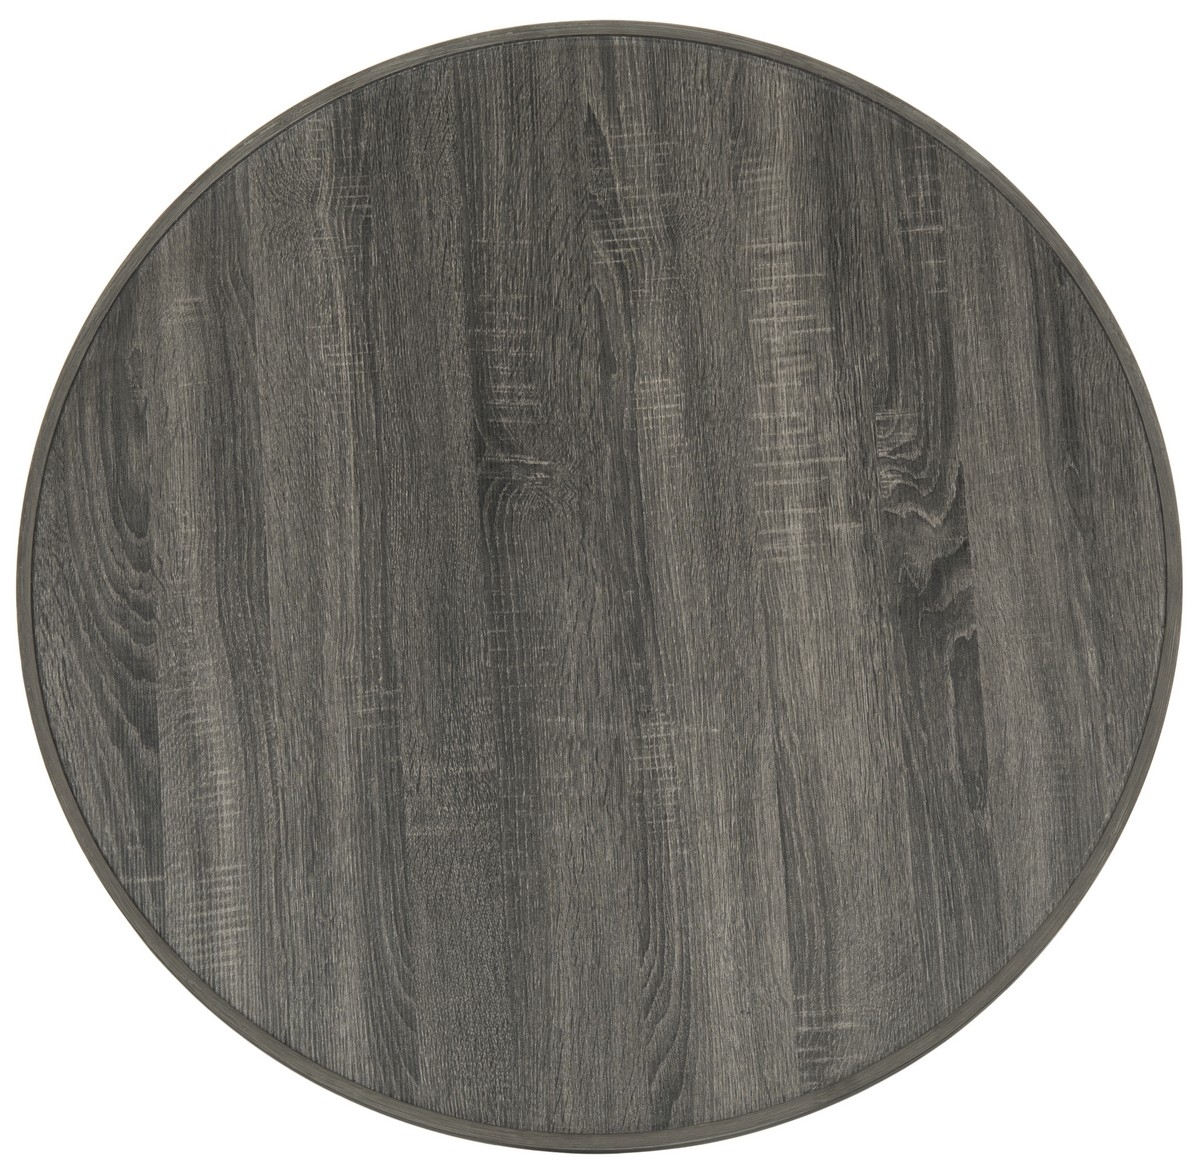 Malone Retro Mid Century Wood Coffee Table - Dark Grey - Arlo Home - Image 3